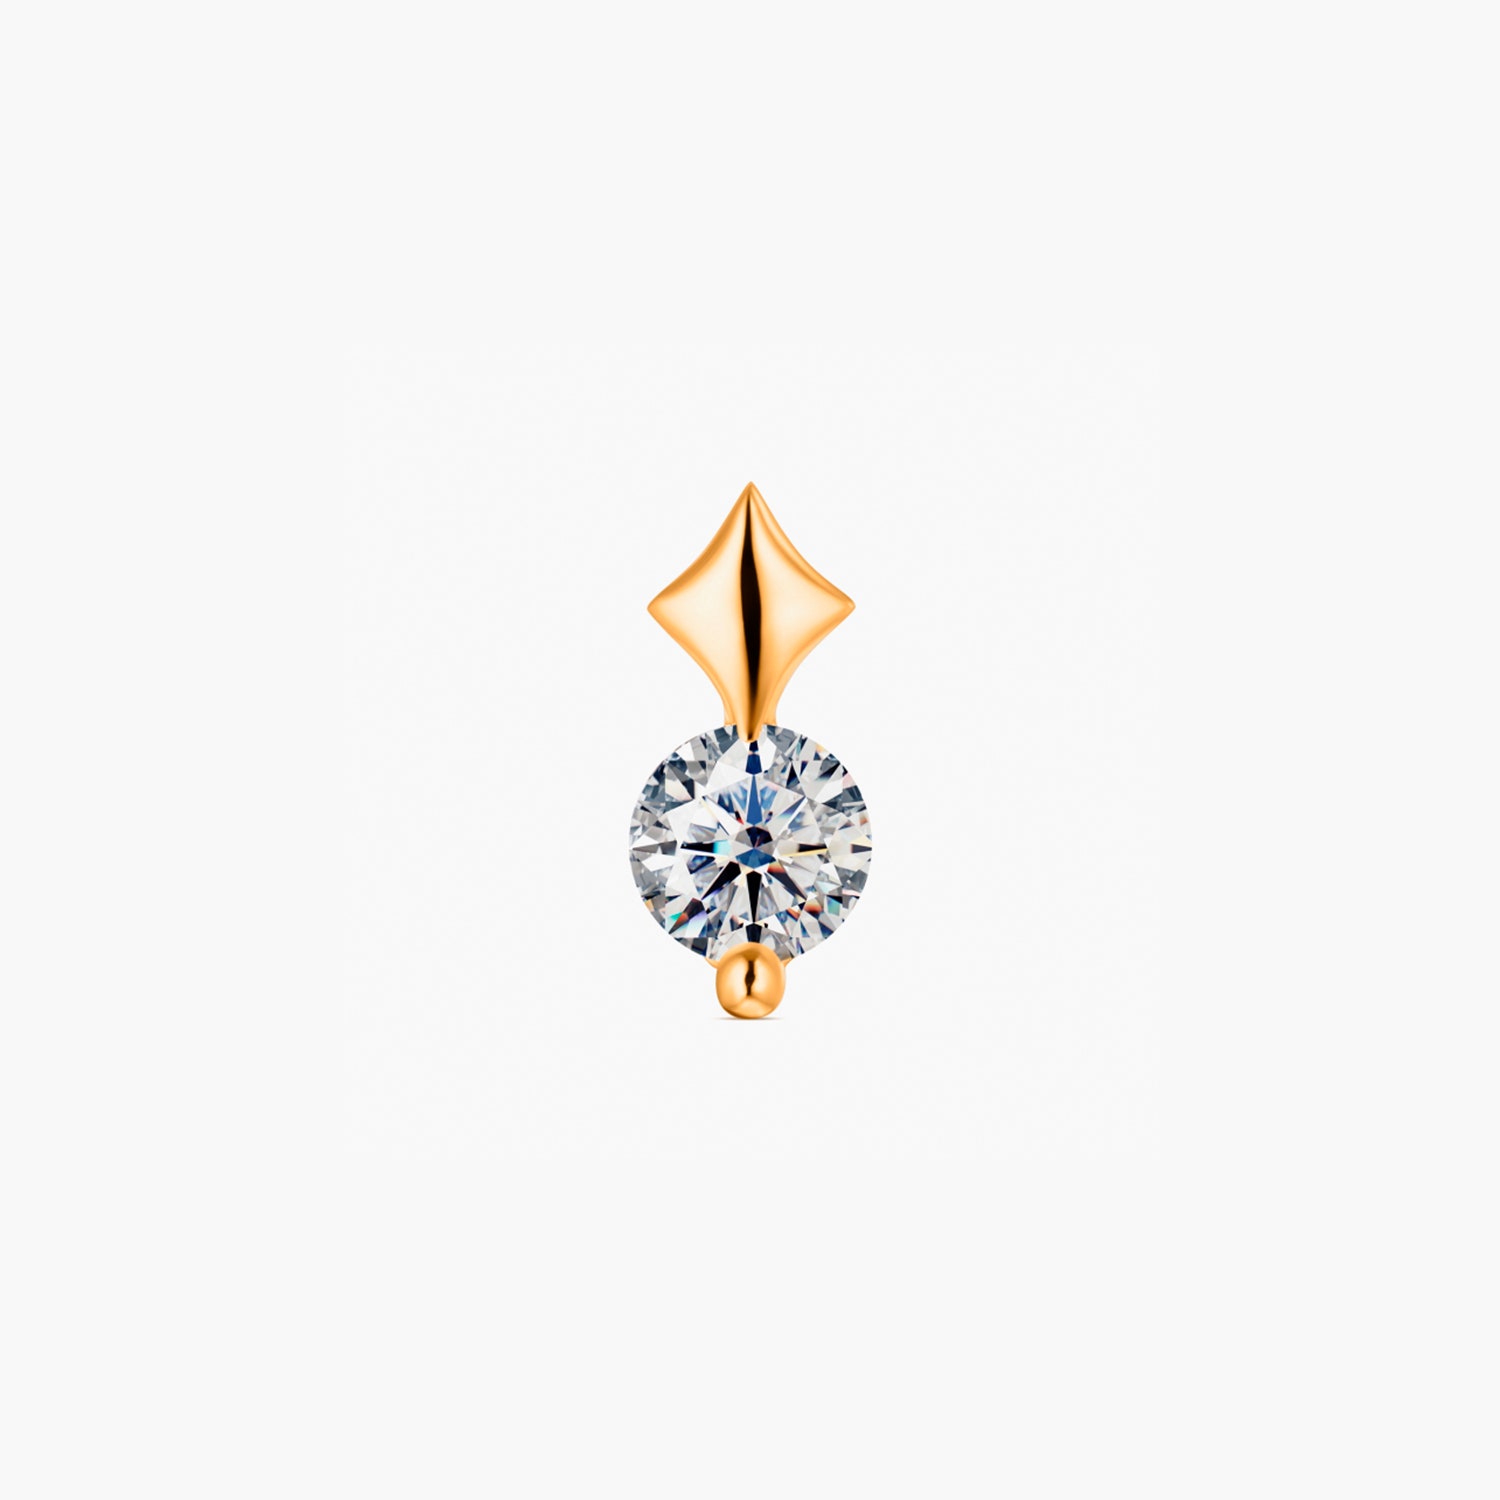 OHMY Diamonds 42400 рублей alrosadiamond.ru